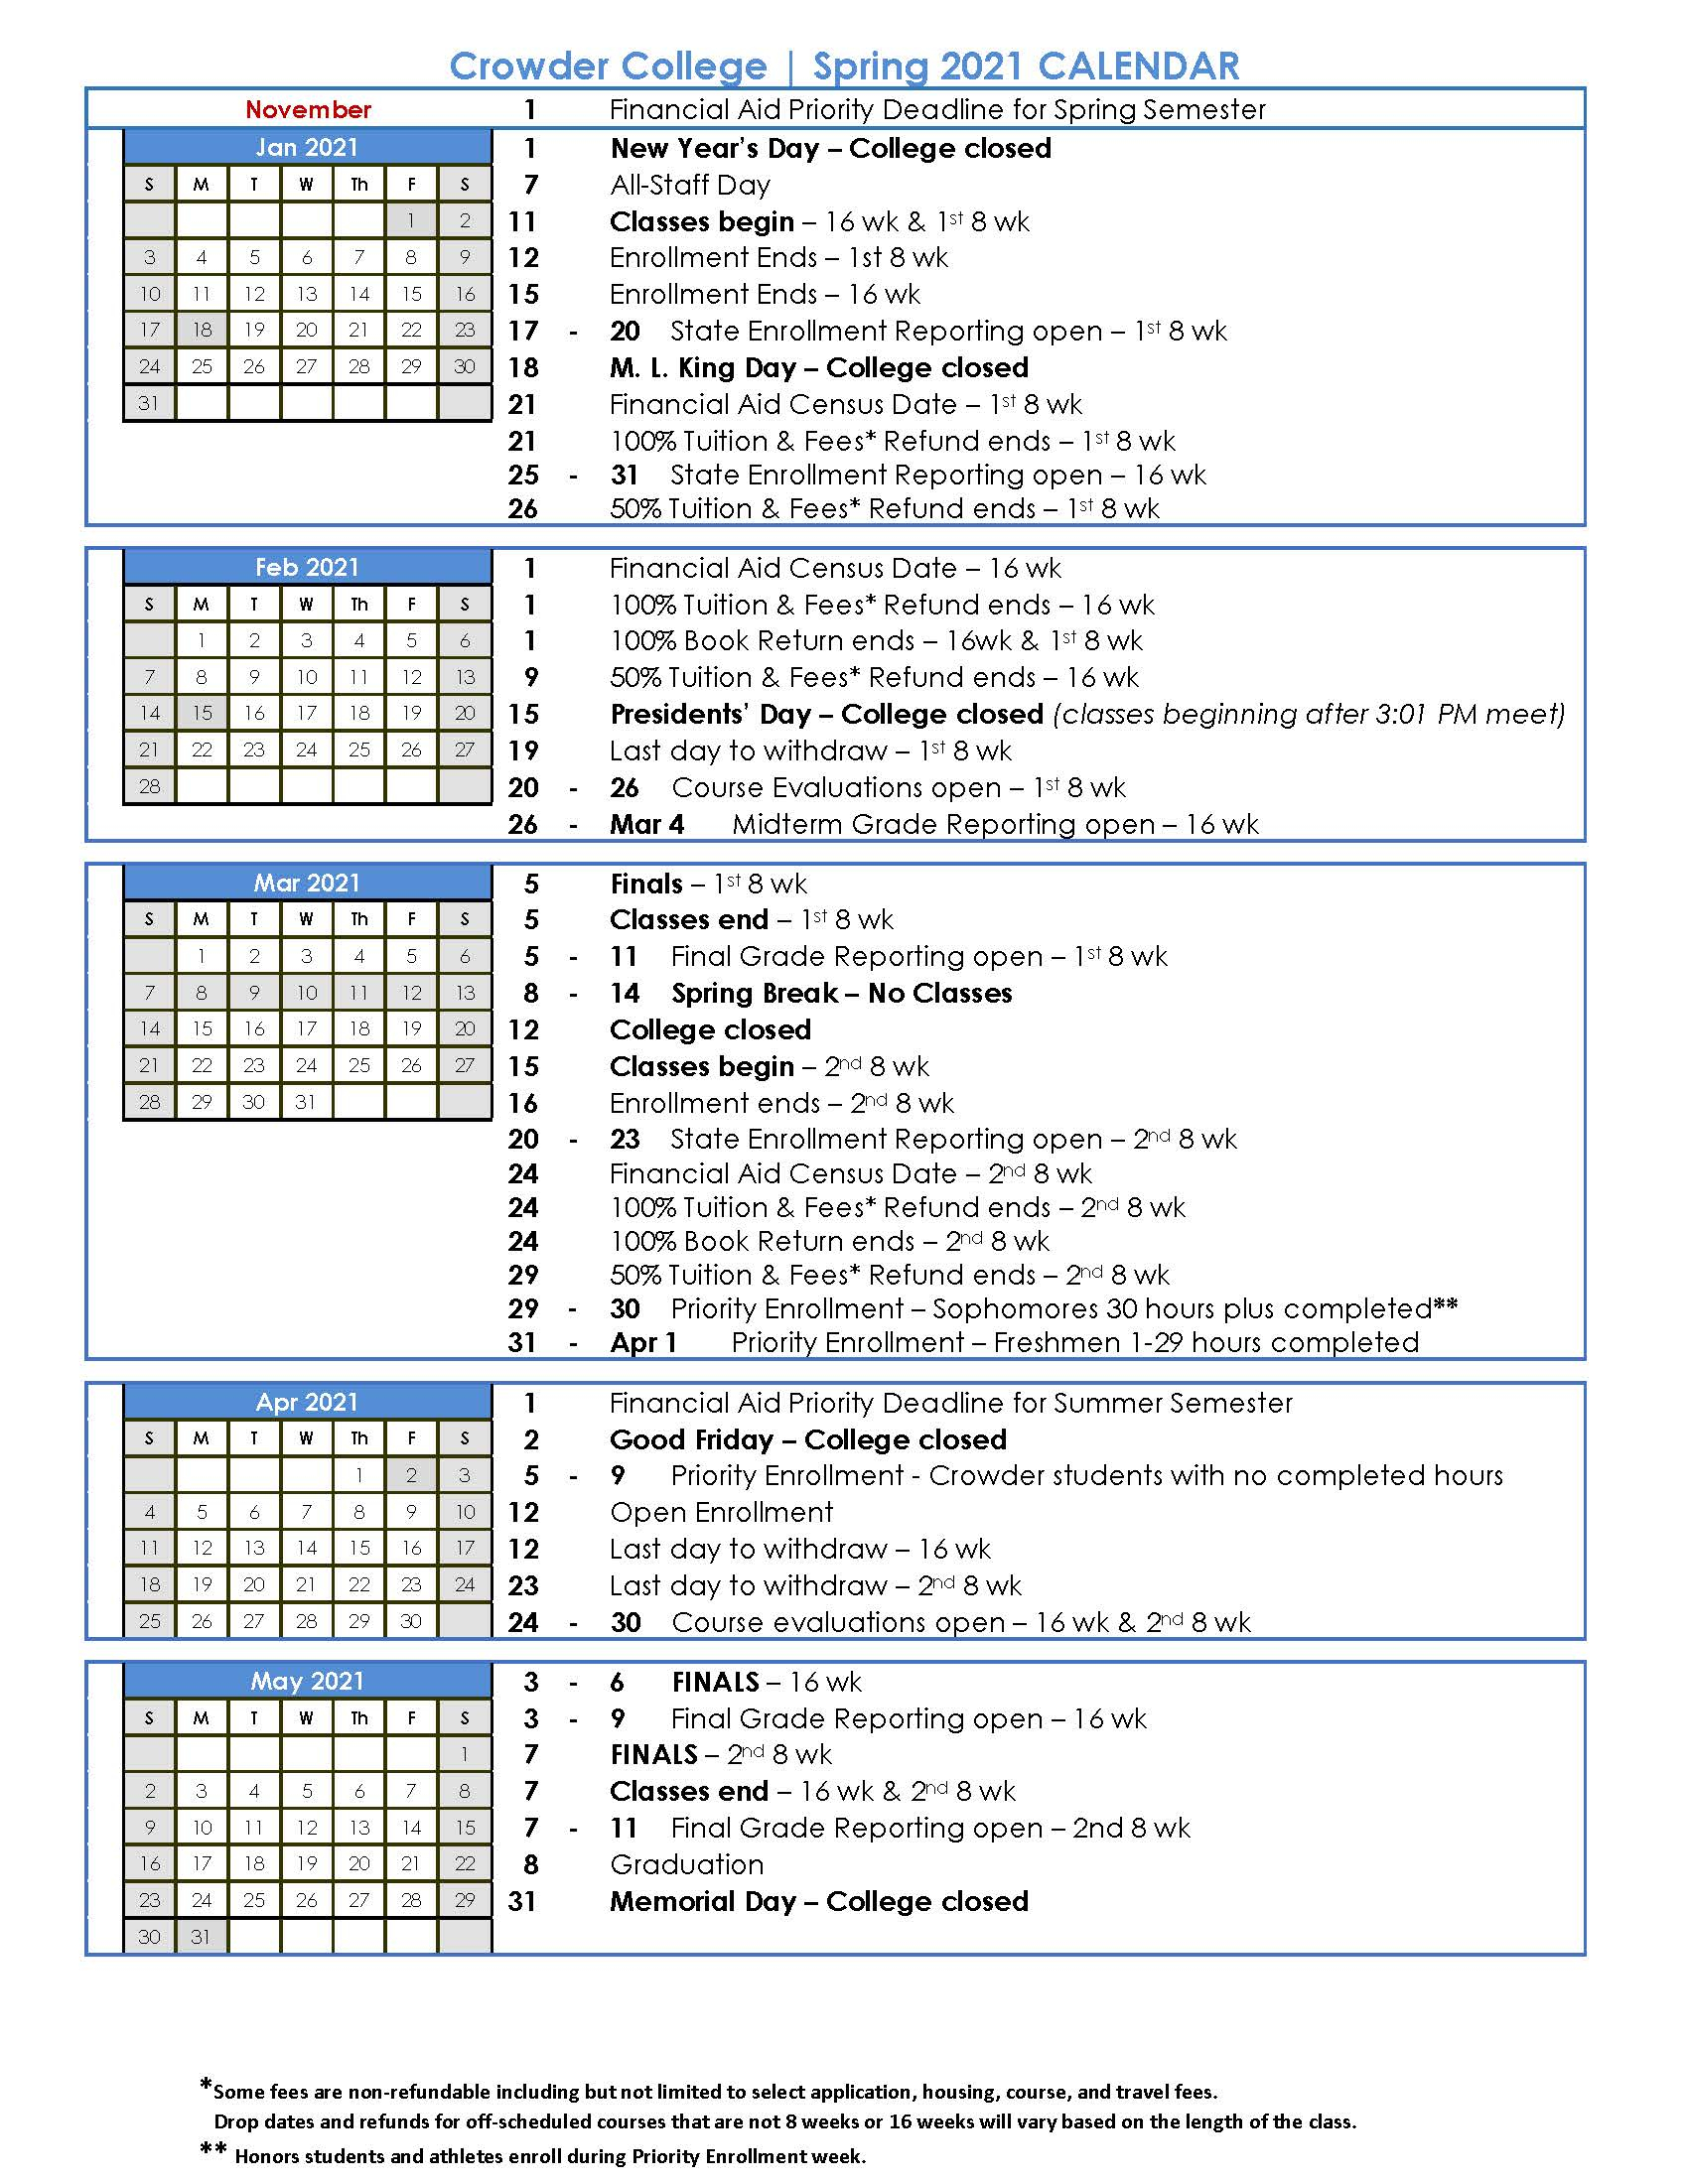 Northeastern 2023 Academic Calendar 2023 Calendar